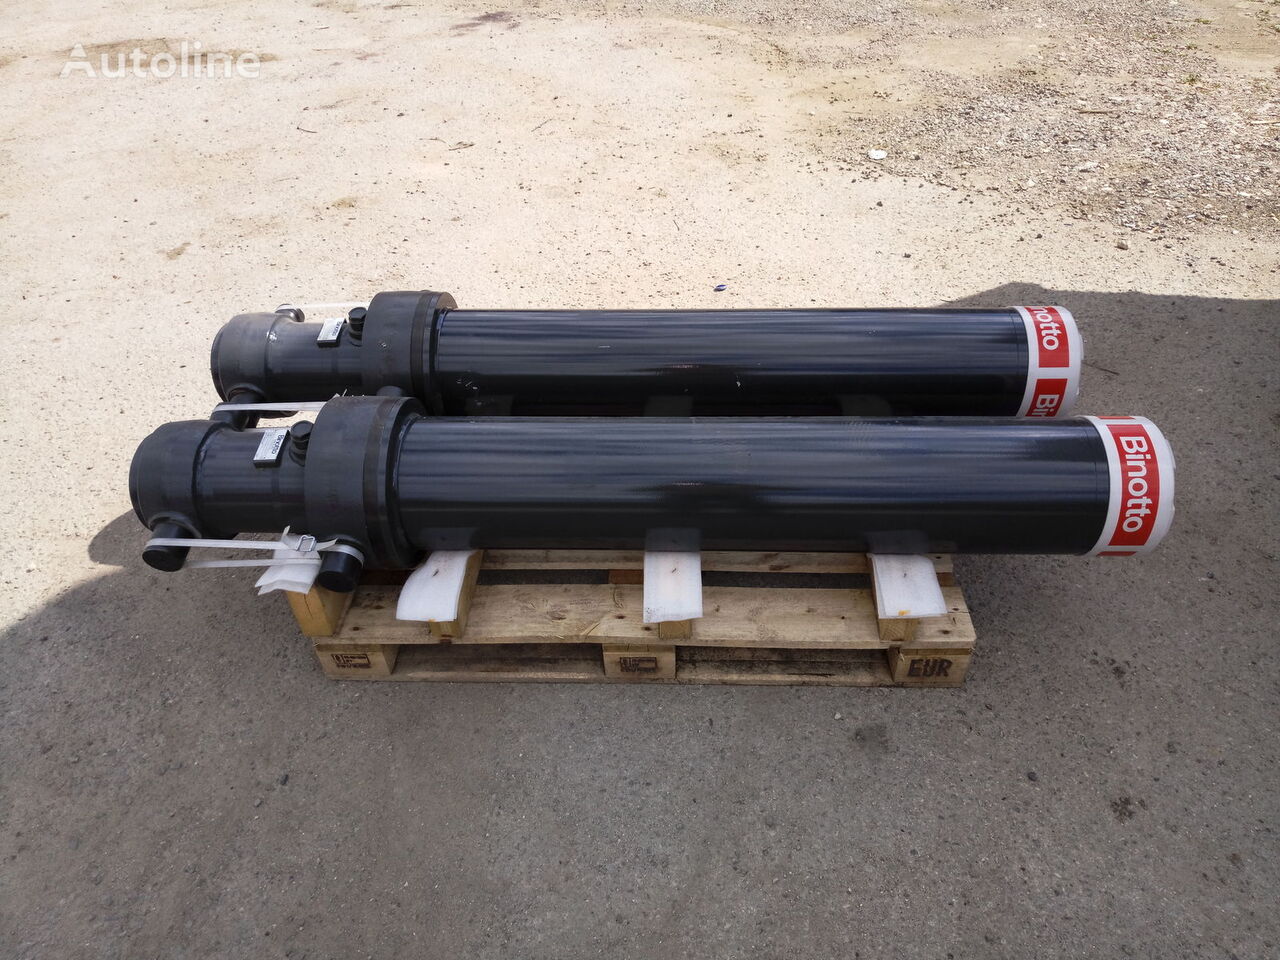 Bodex BINOTTO BINOTTO hydraulic cylinder for Bodex semi-trailer